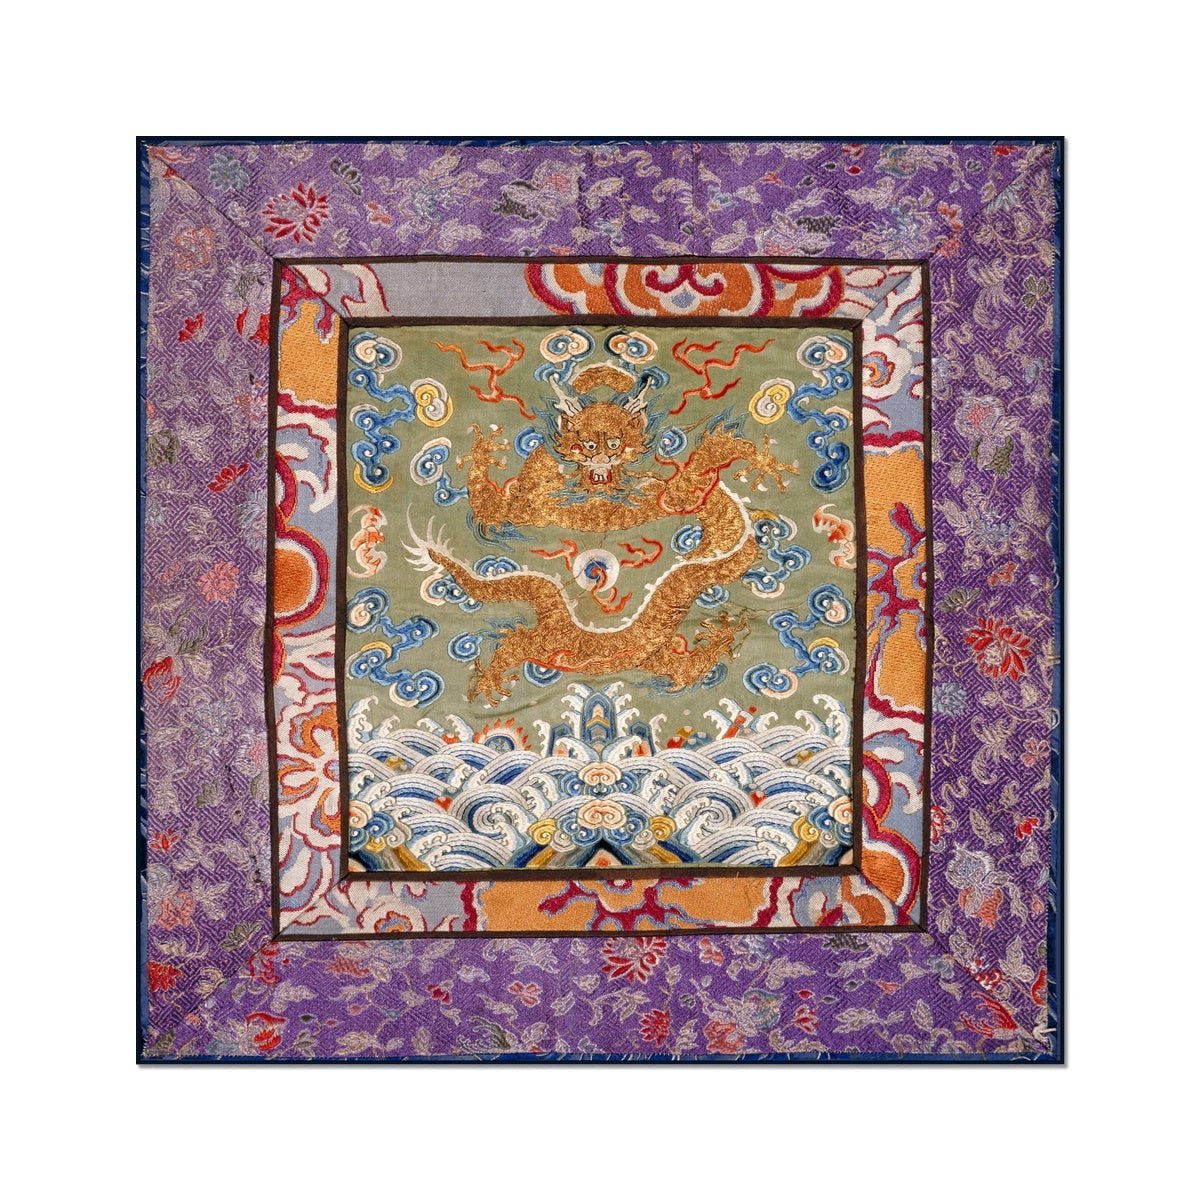 giclee Qing Dynasty, Chinese Mythology Silk Embroidery Gold Dragon Antique Mandarin Square Folk Art Fine Taoist Art Print